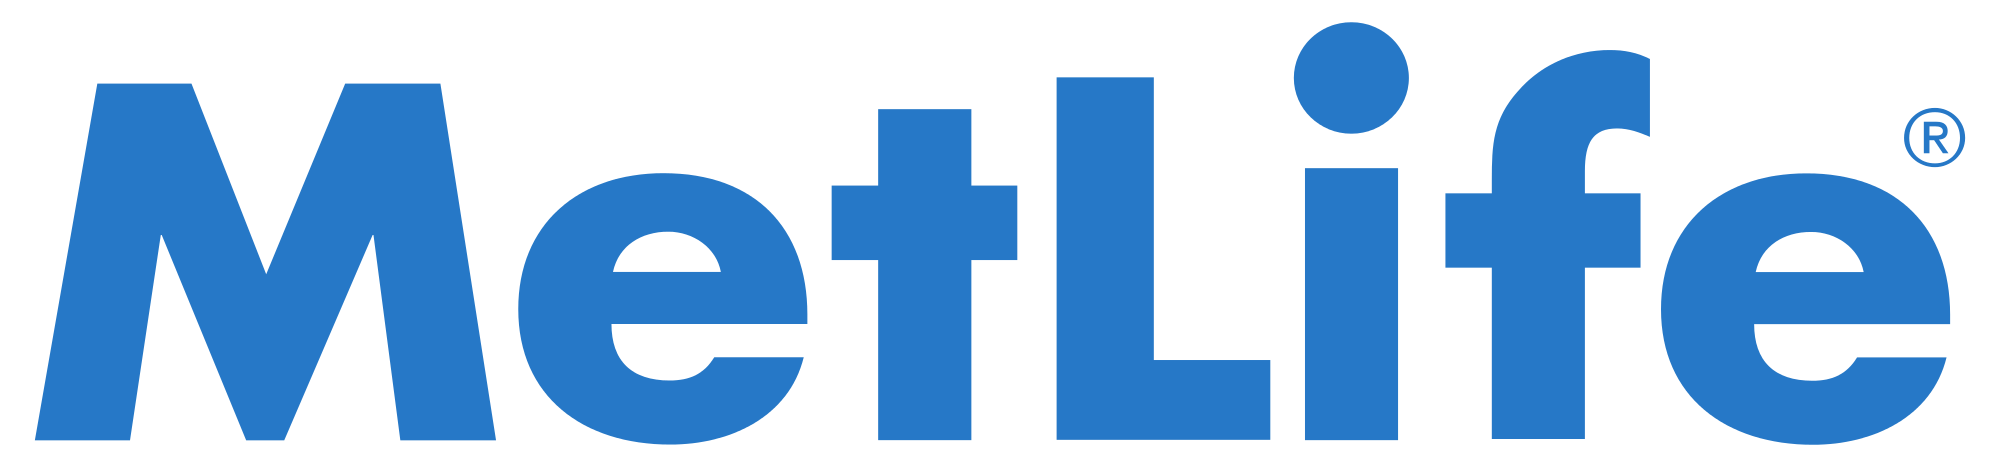 MetLife Insurance logo